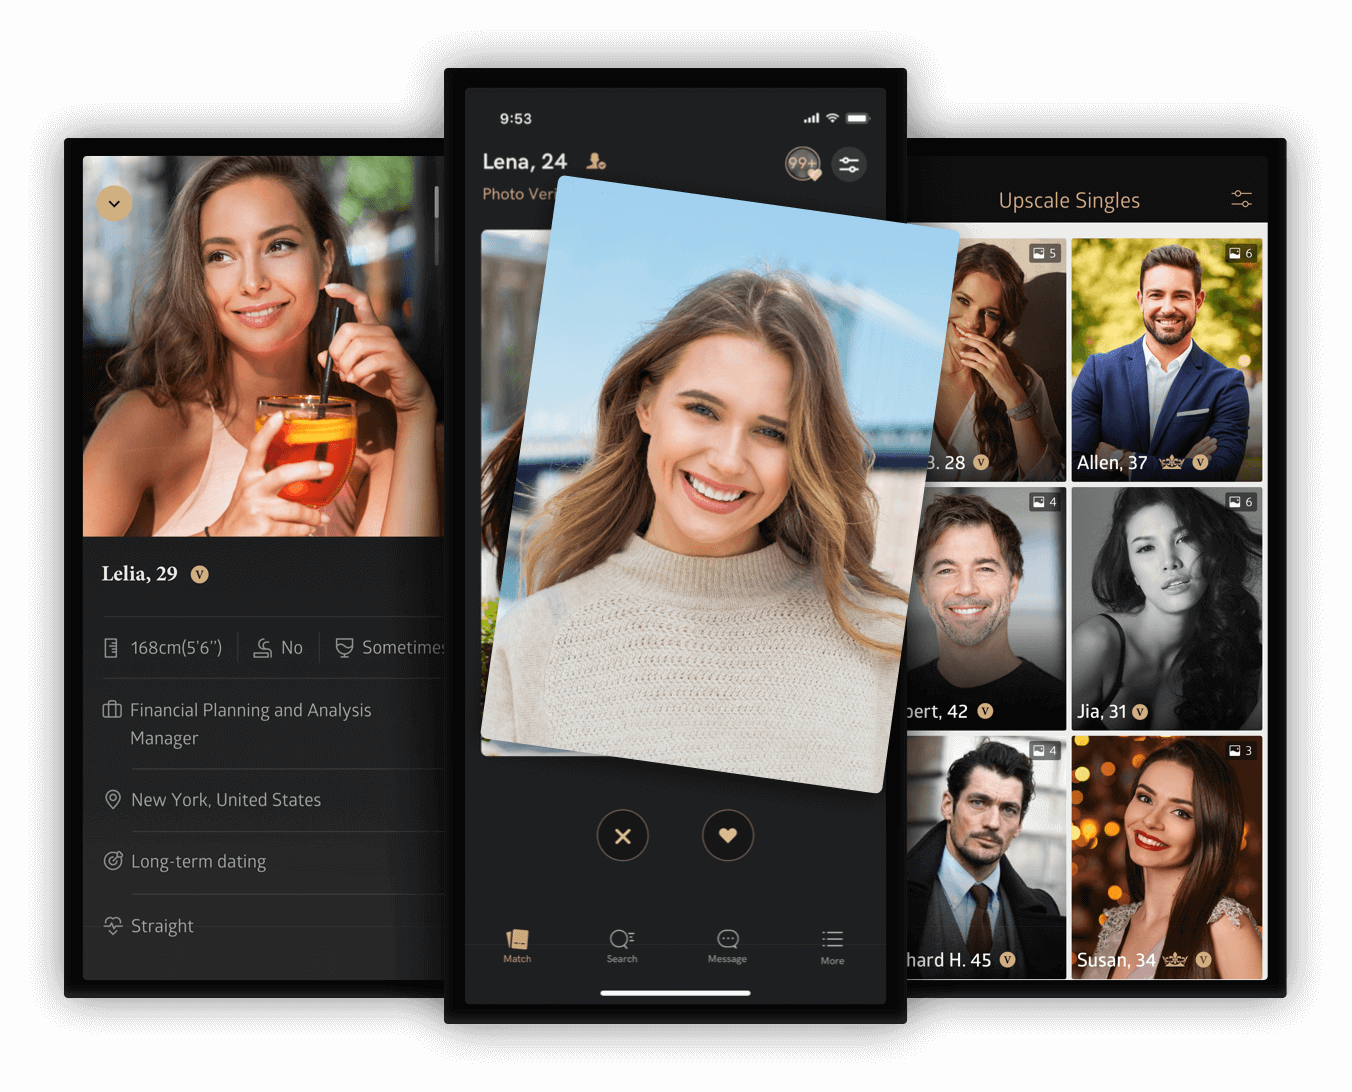 Millionaire dating app Luxy now …